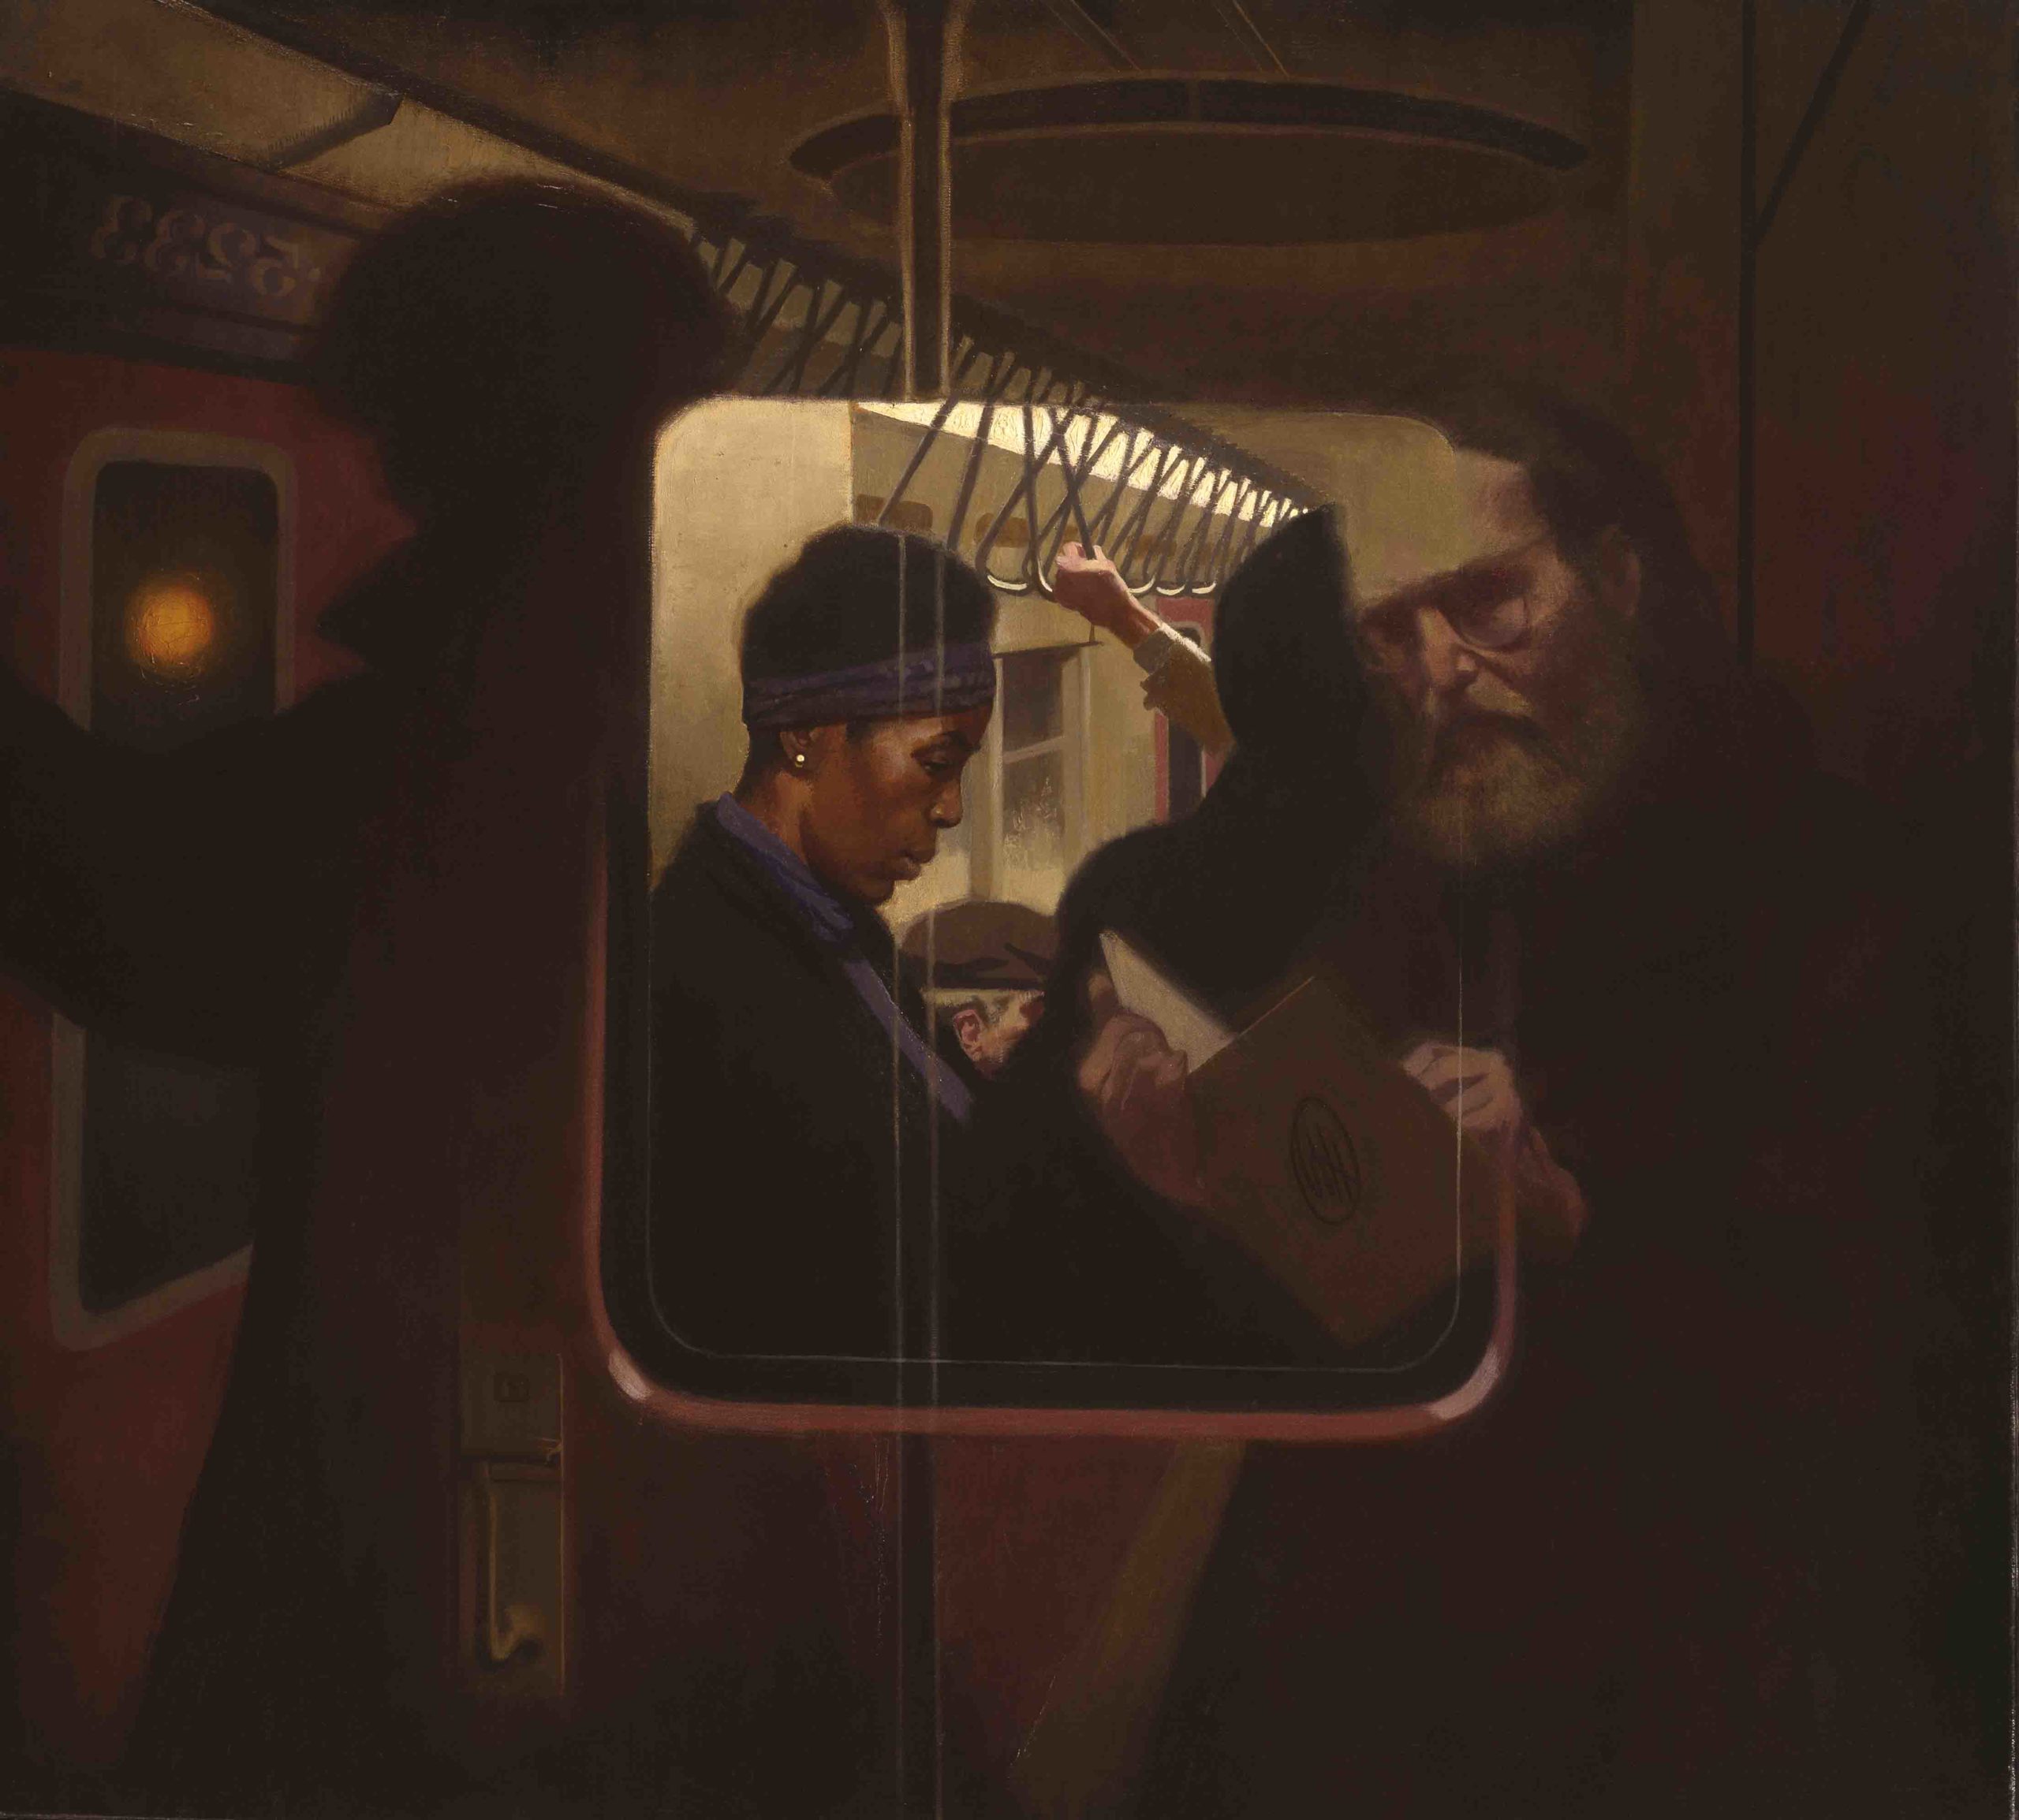 

											Harvey Dinnerstein</b>

											<em>
												Underground</em> 

											<h4>
												October 16											</h4>

		                																																													<i>Underground Reflections,</i>  
																																								1995, 
																																								oil on canvas, 
																																								39 x 42 inches 
																								
		                				